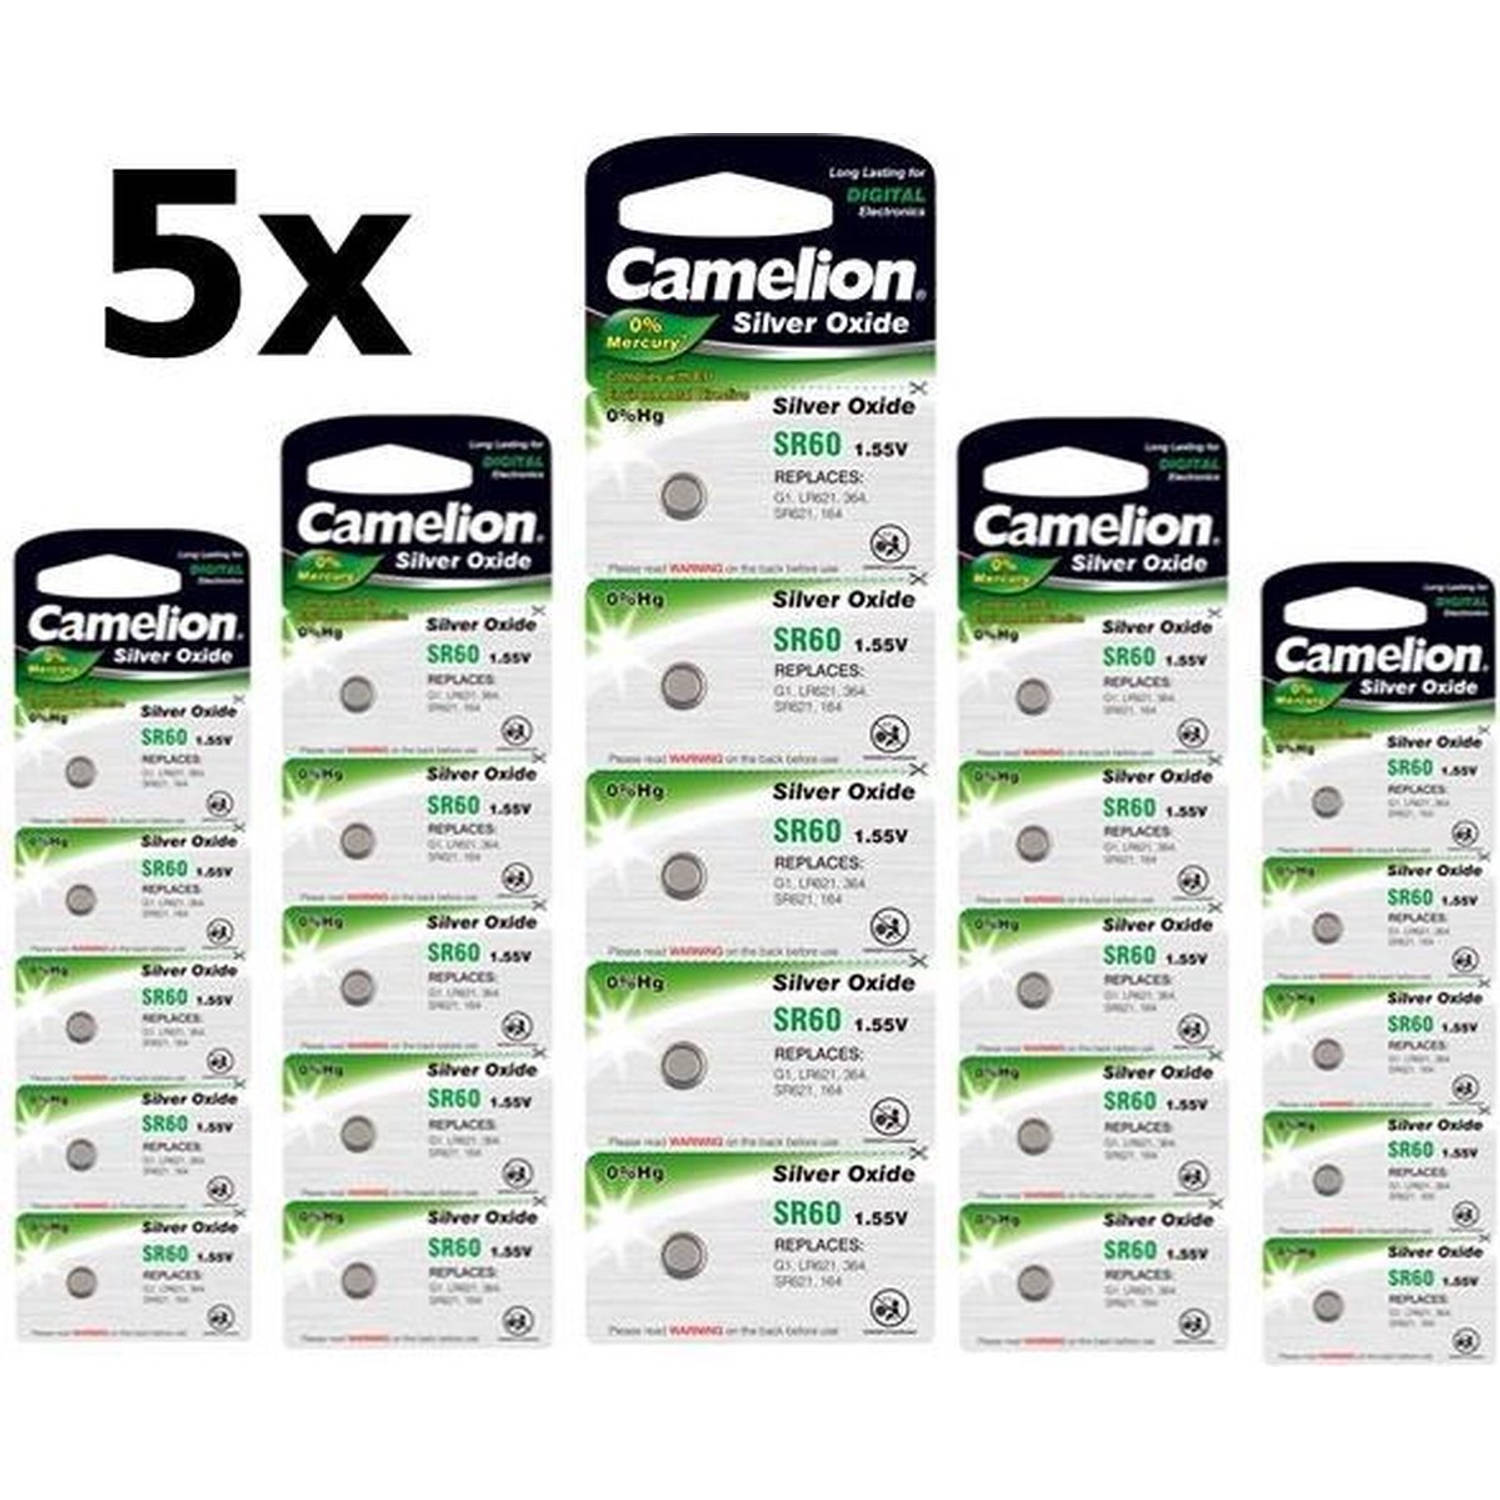 25 Stuks (5 Blisters a 5st) - Camelion Silver Oxide SR60 /364 1.55V knoopcel batterij